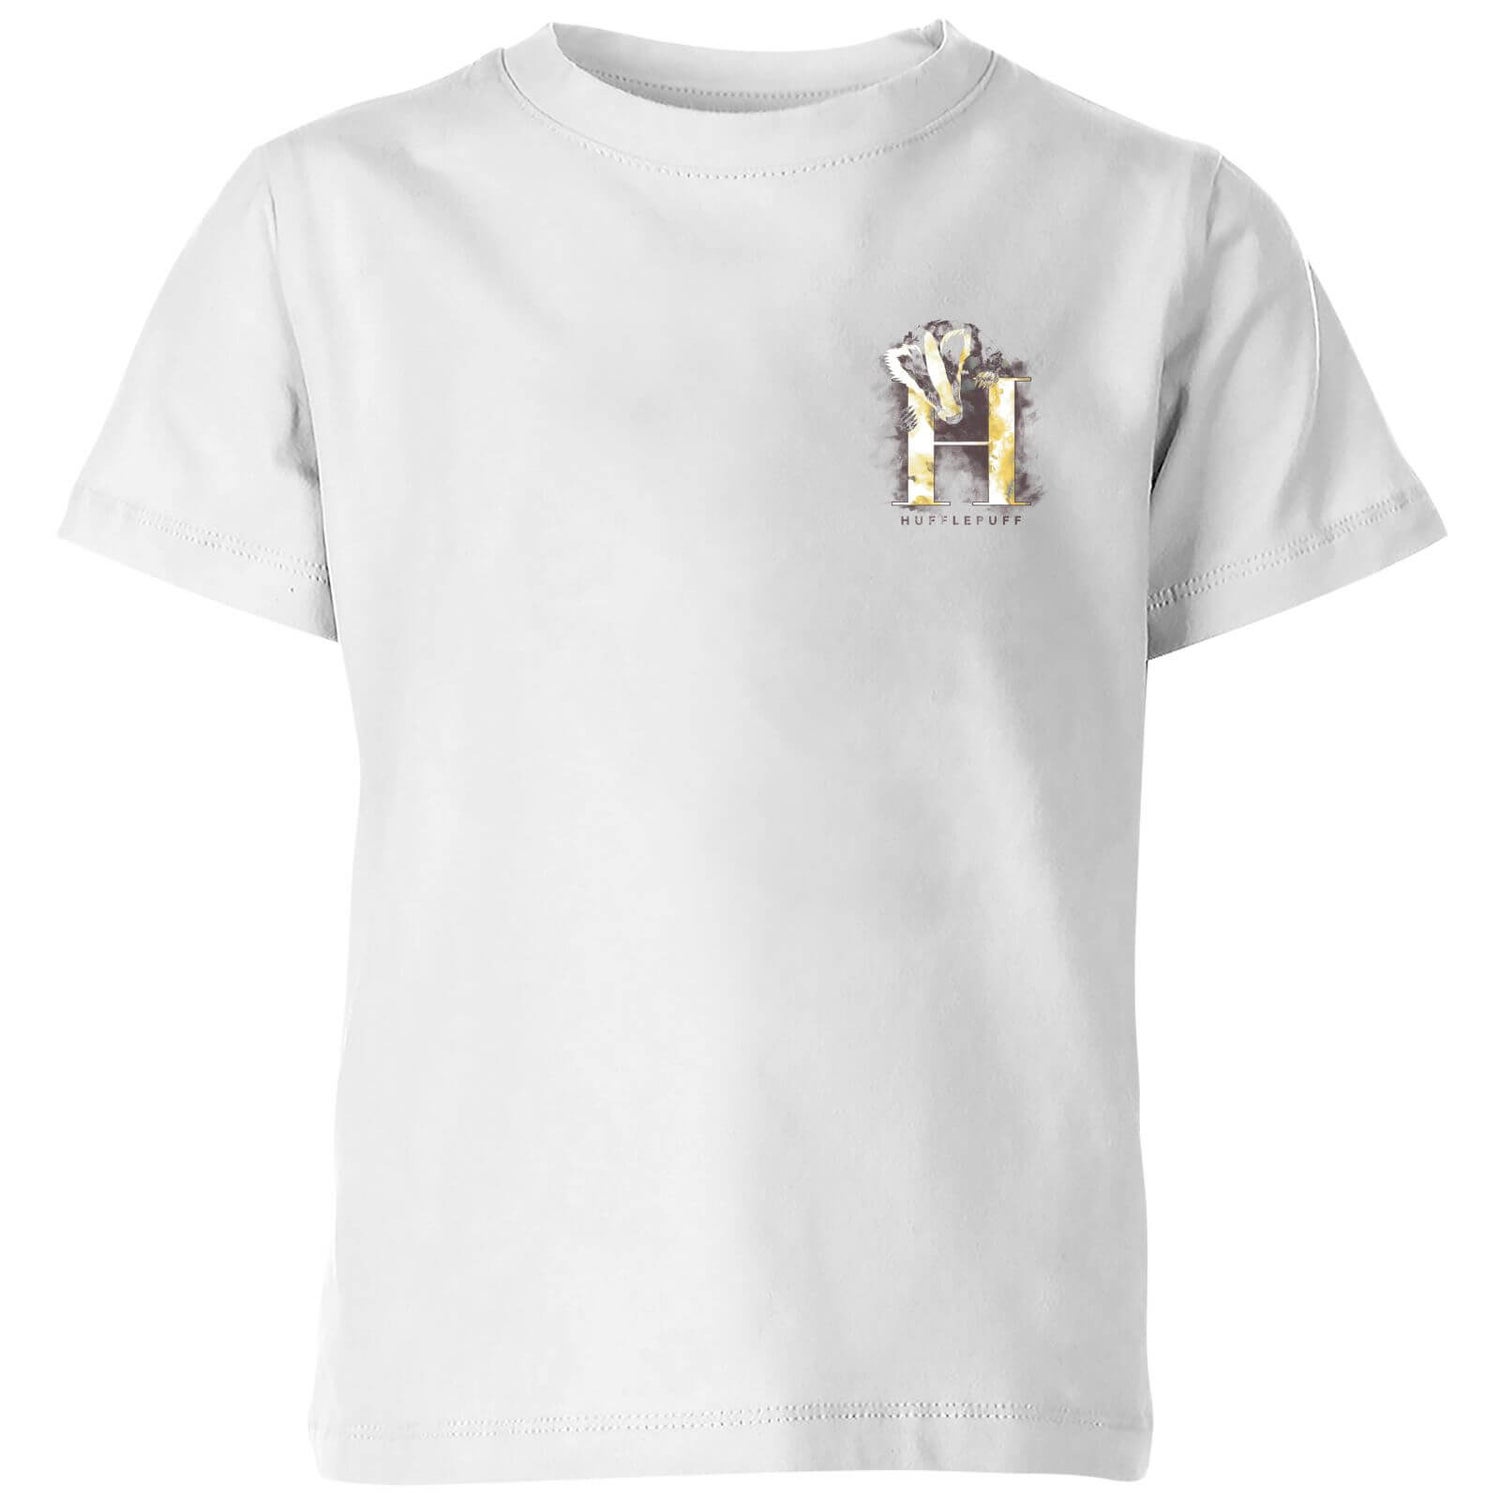 Camiseta para niños Hufflepuff de Harry Potter - Blanco